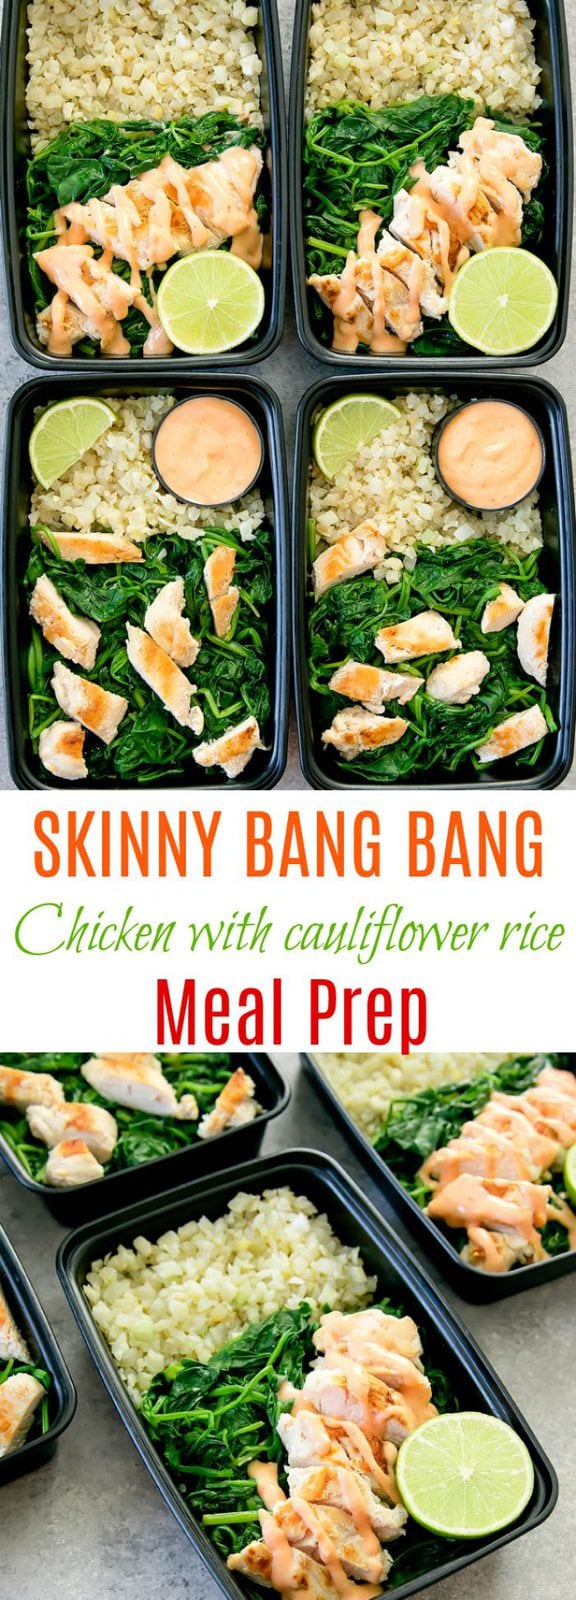 Skinny Bang Bang Chicken with Cauliflower Rice Meal Prep